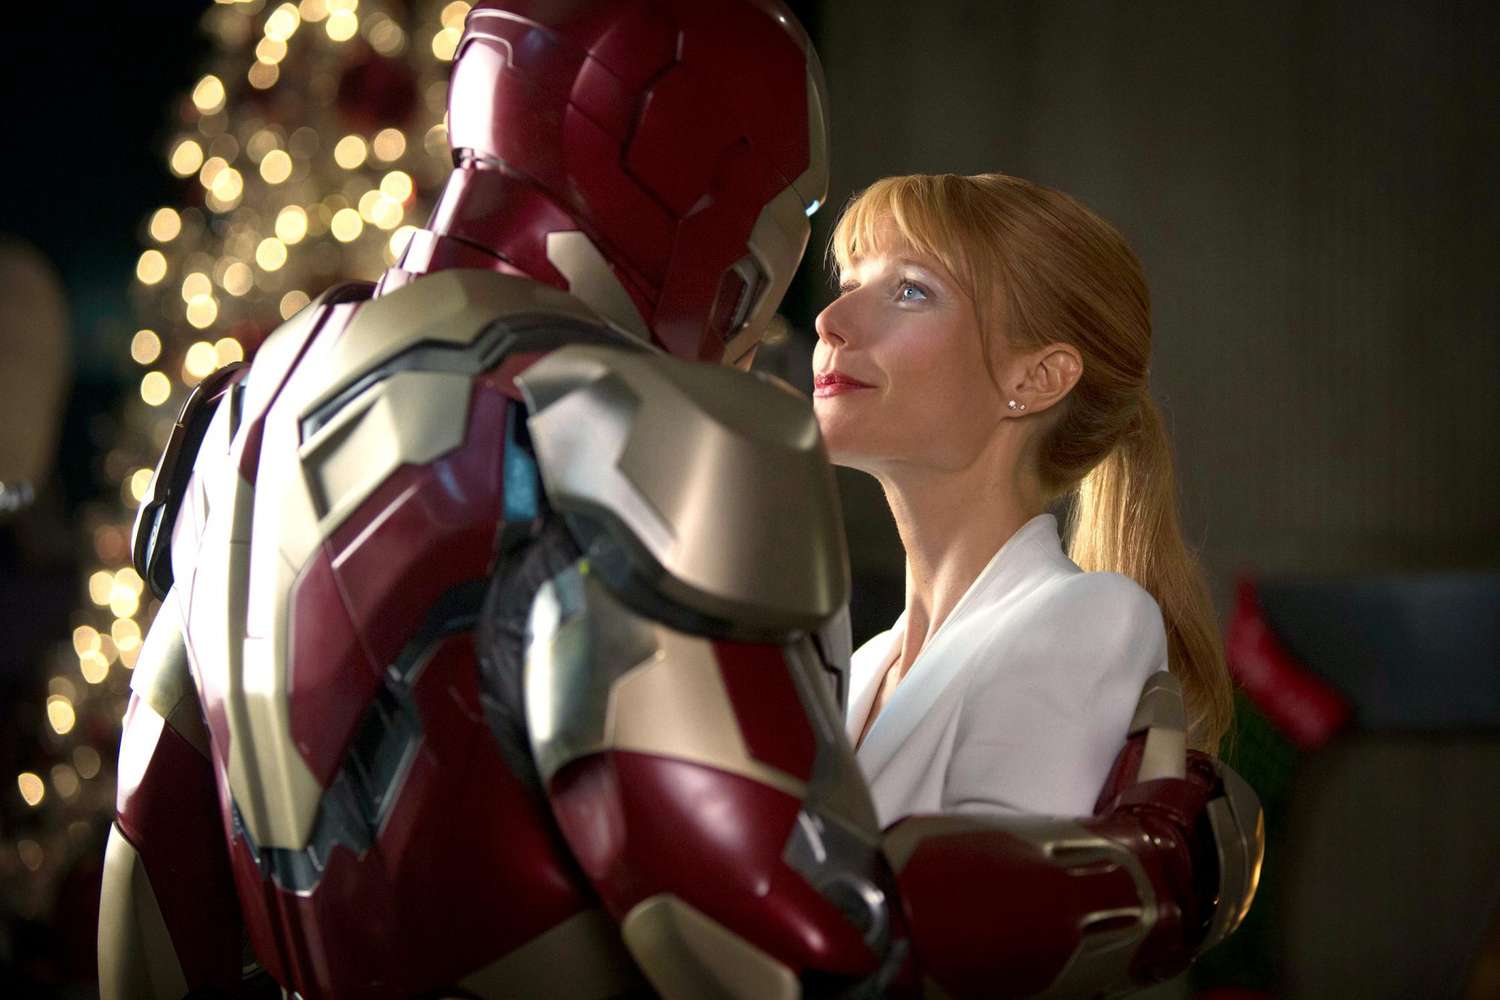 Iron Man 3 (2013)Tony Stark / Iron Man (Robert Downey Jr.) and Gwyneth Paltrow